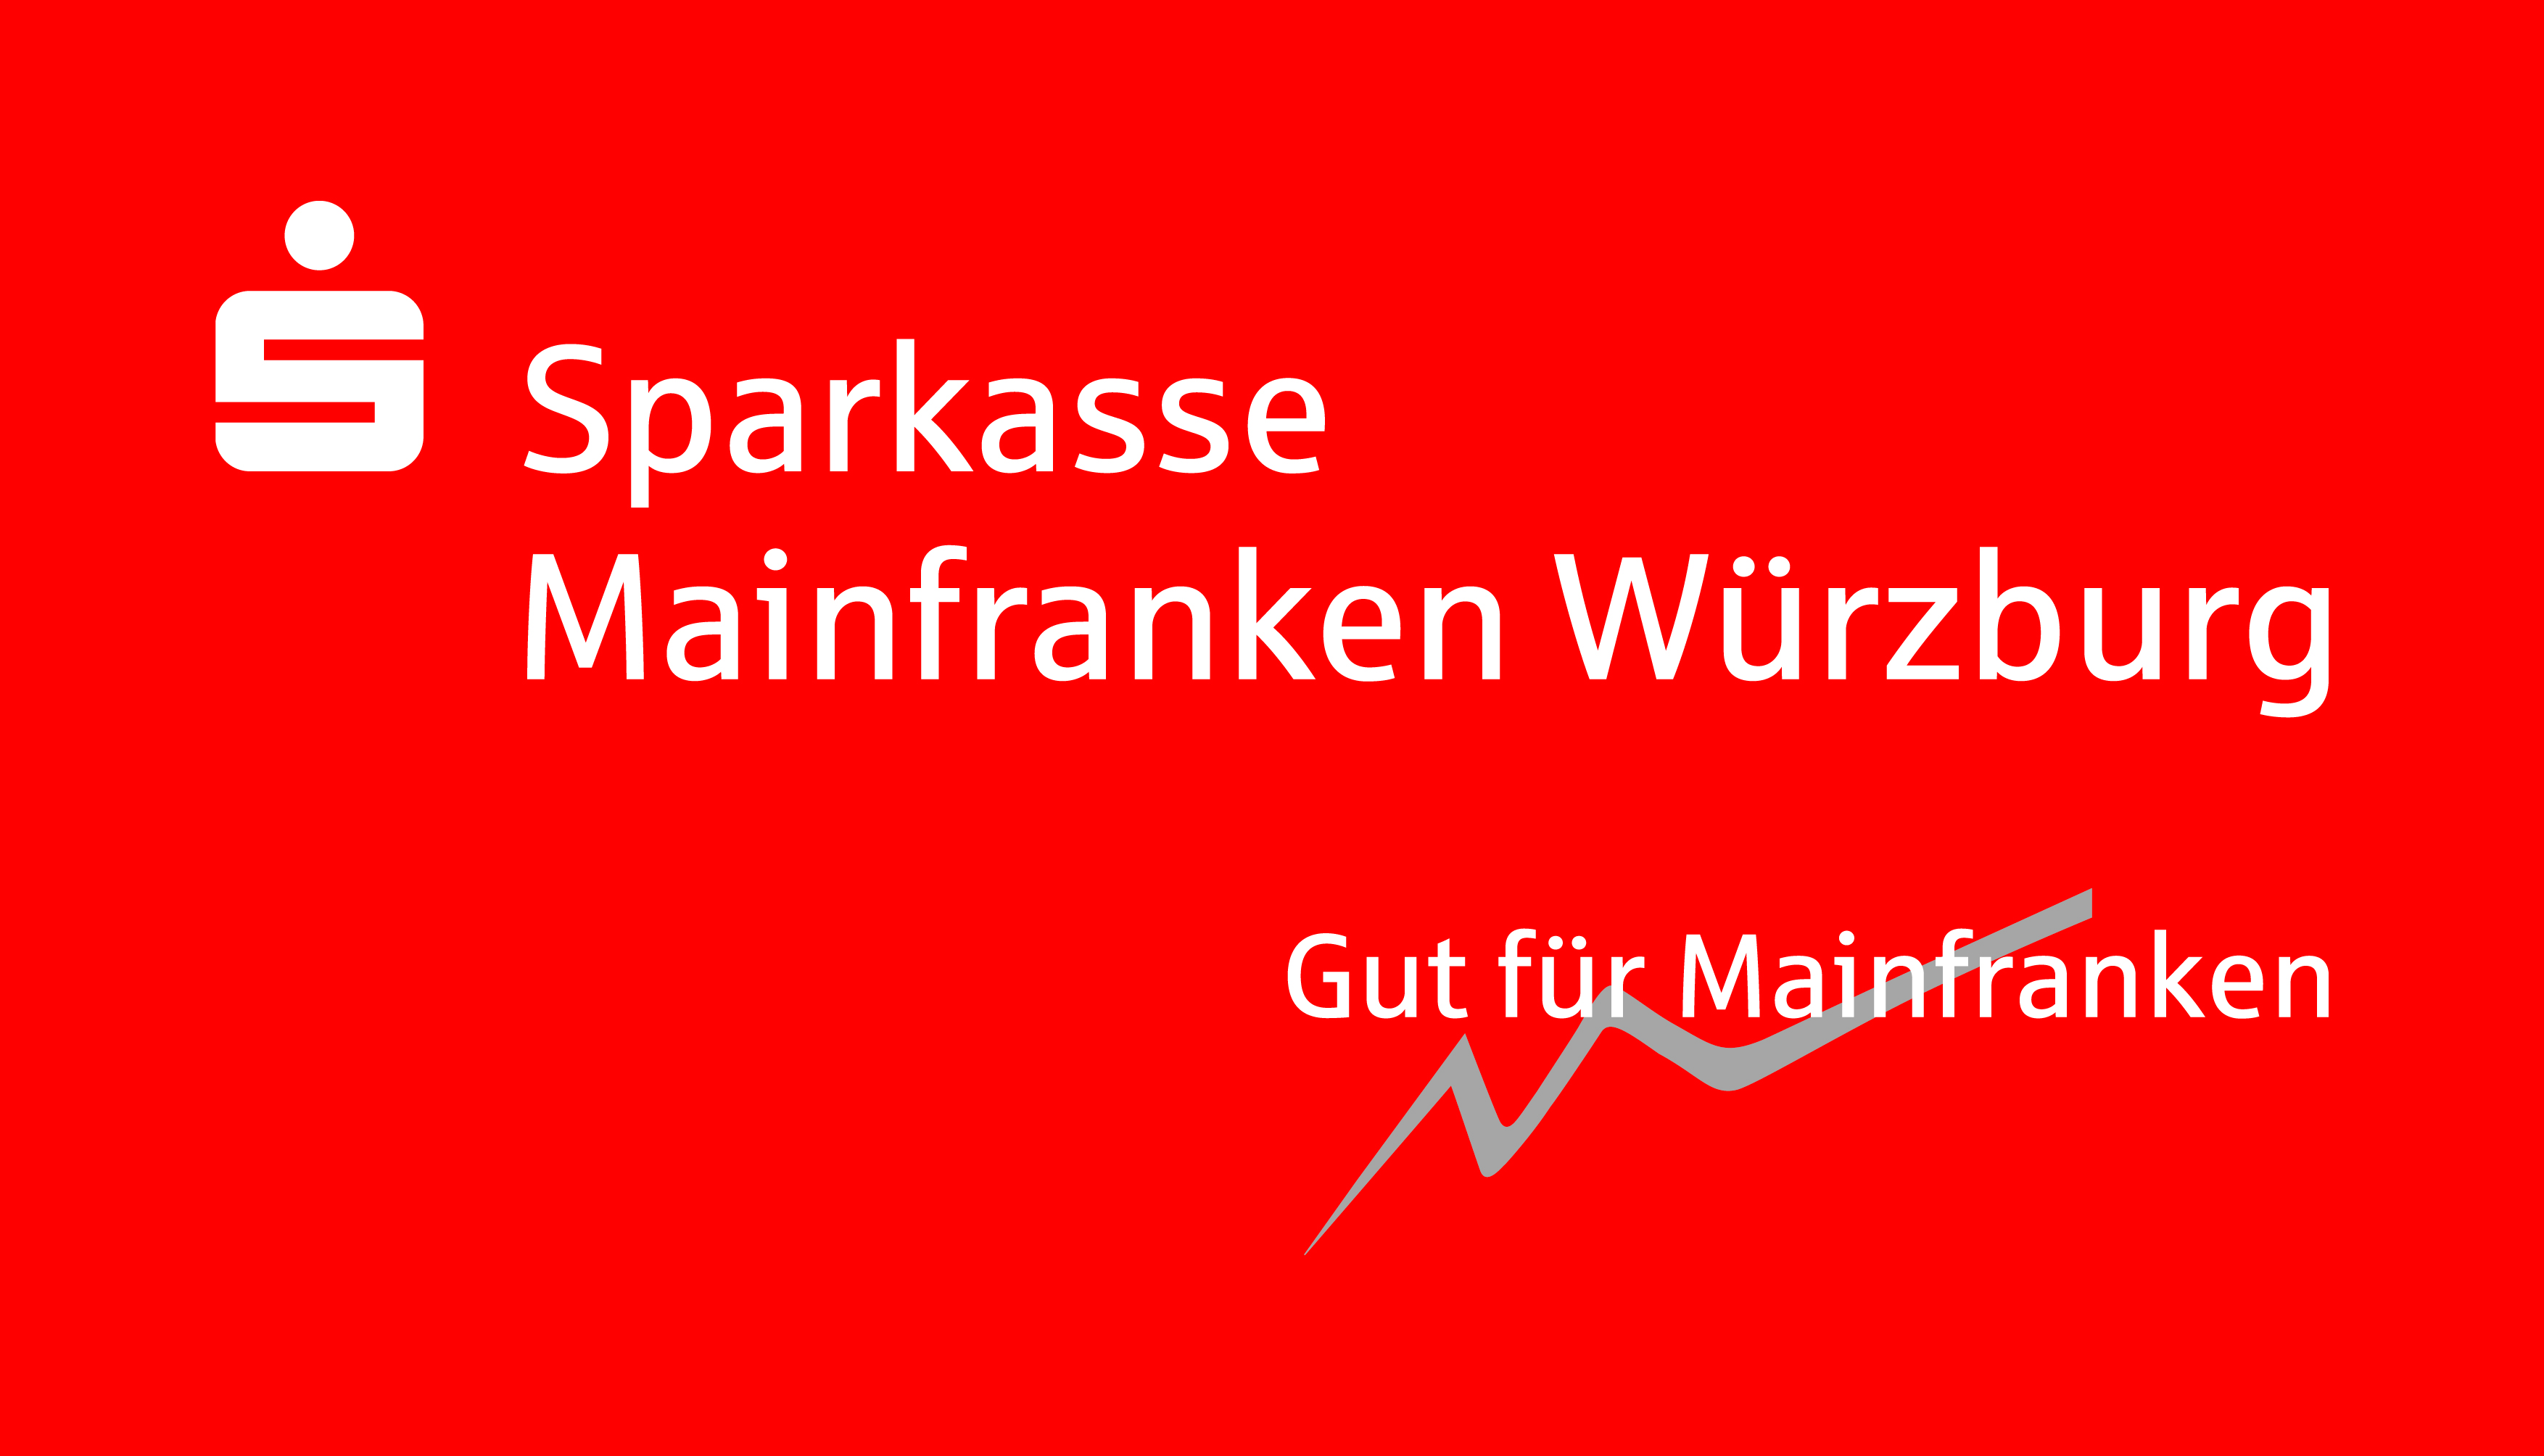  Sparkasse Mainfranken Würzburg 